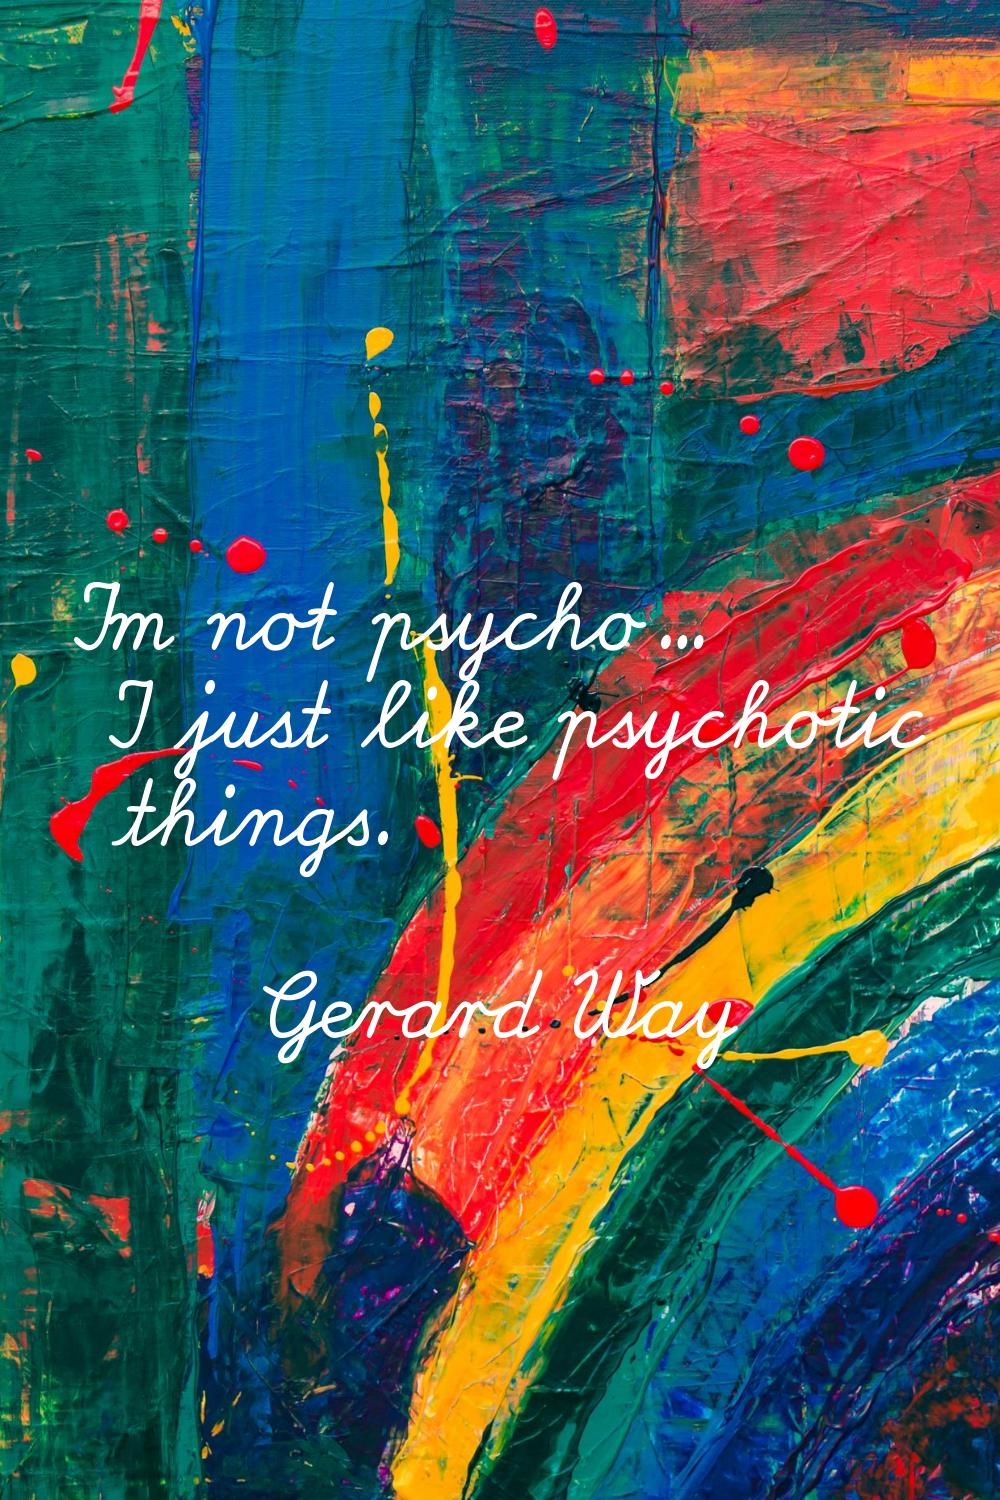 I'm not psycho... I just like psychotic things.